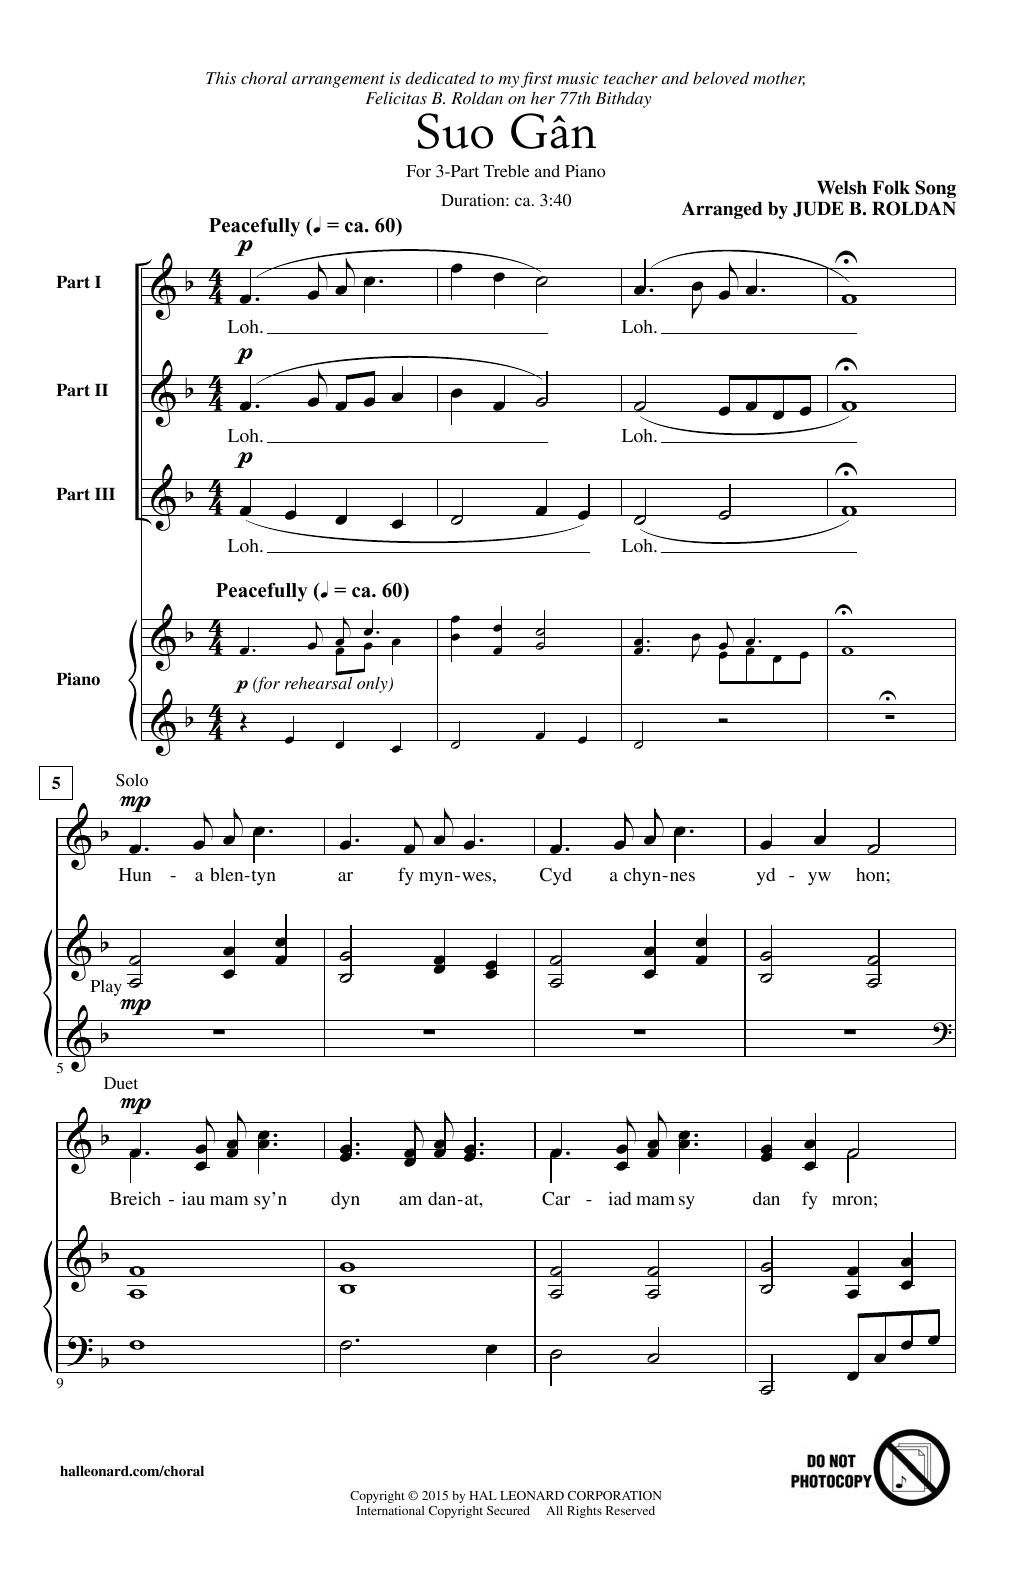 Jude Roldan Suo Gan Sheet Music Notes & Chords for 3-Part Treble - Download or Print PDF